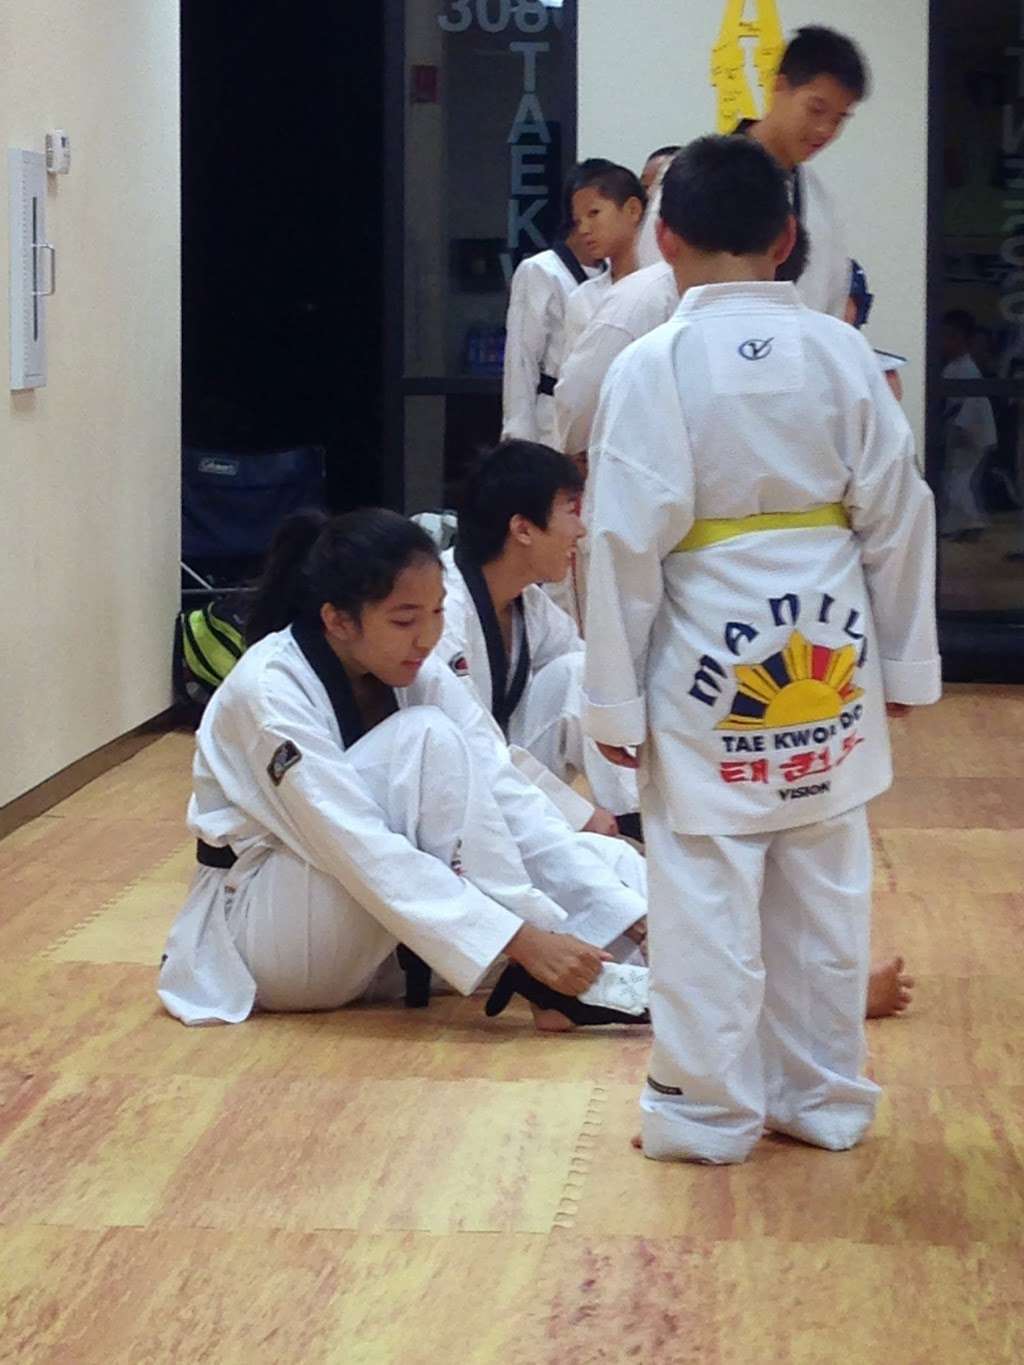 Manila Taekwondo | 30807 Union City Blvd, Union City, CA 94587 | Phone: (510) 441-8661